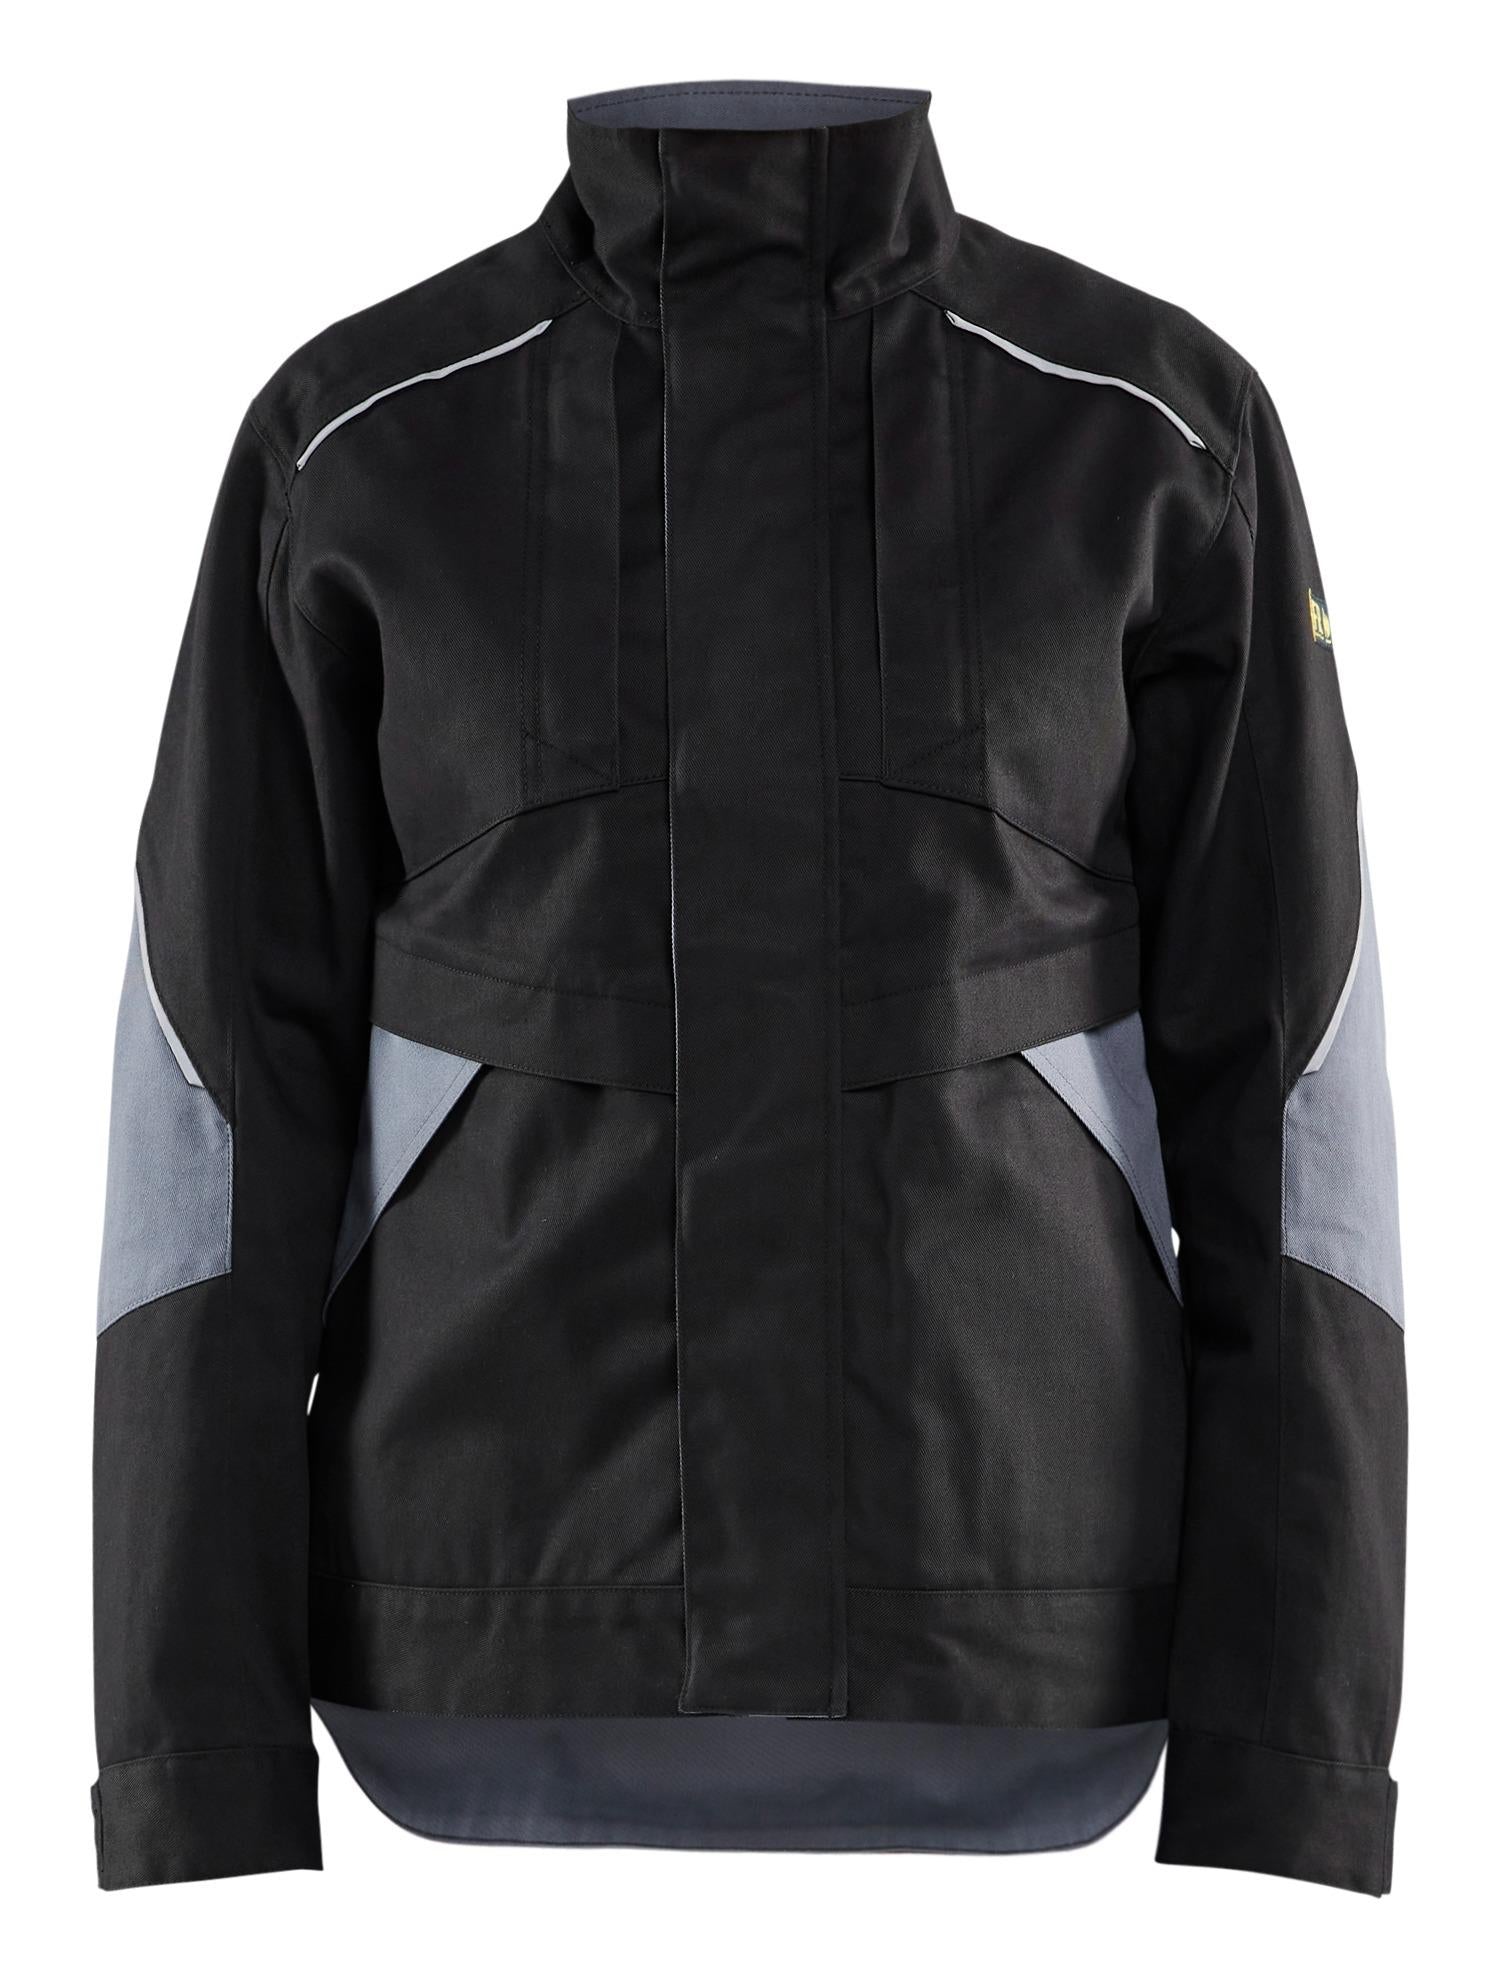 Blaklader black/grey women's flame-retardent anti-static welder's jacket #4071